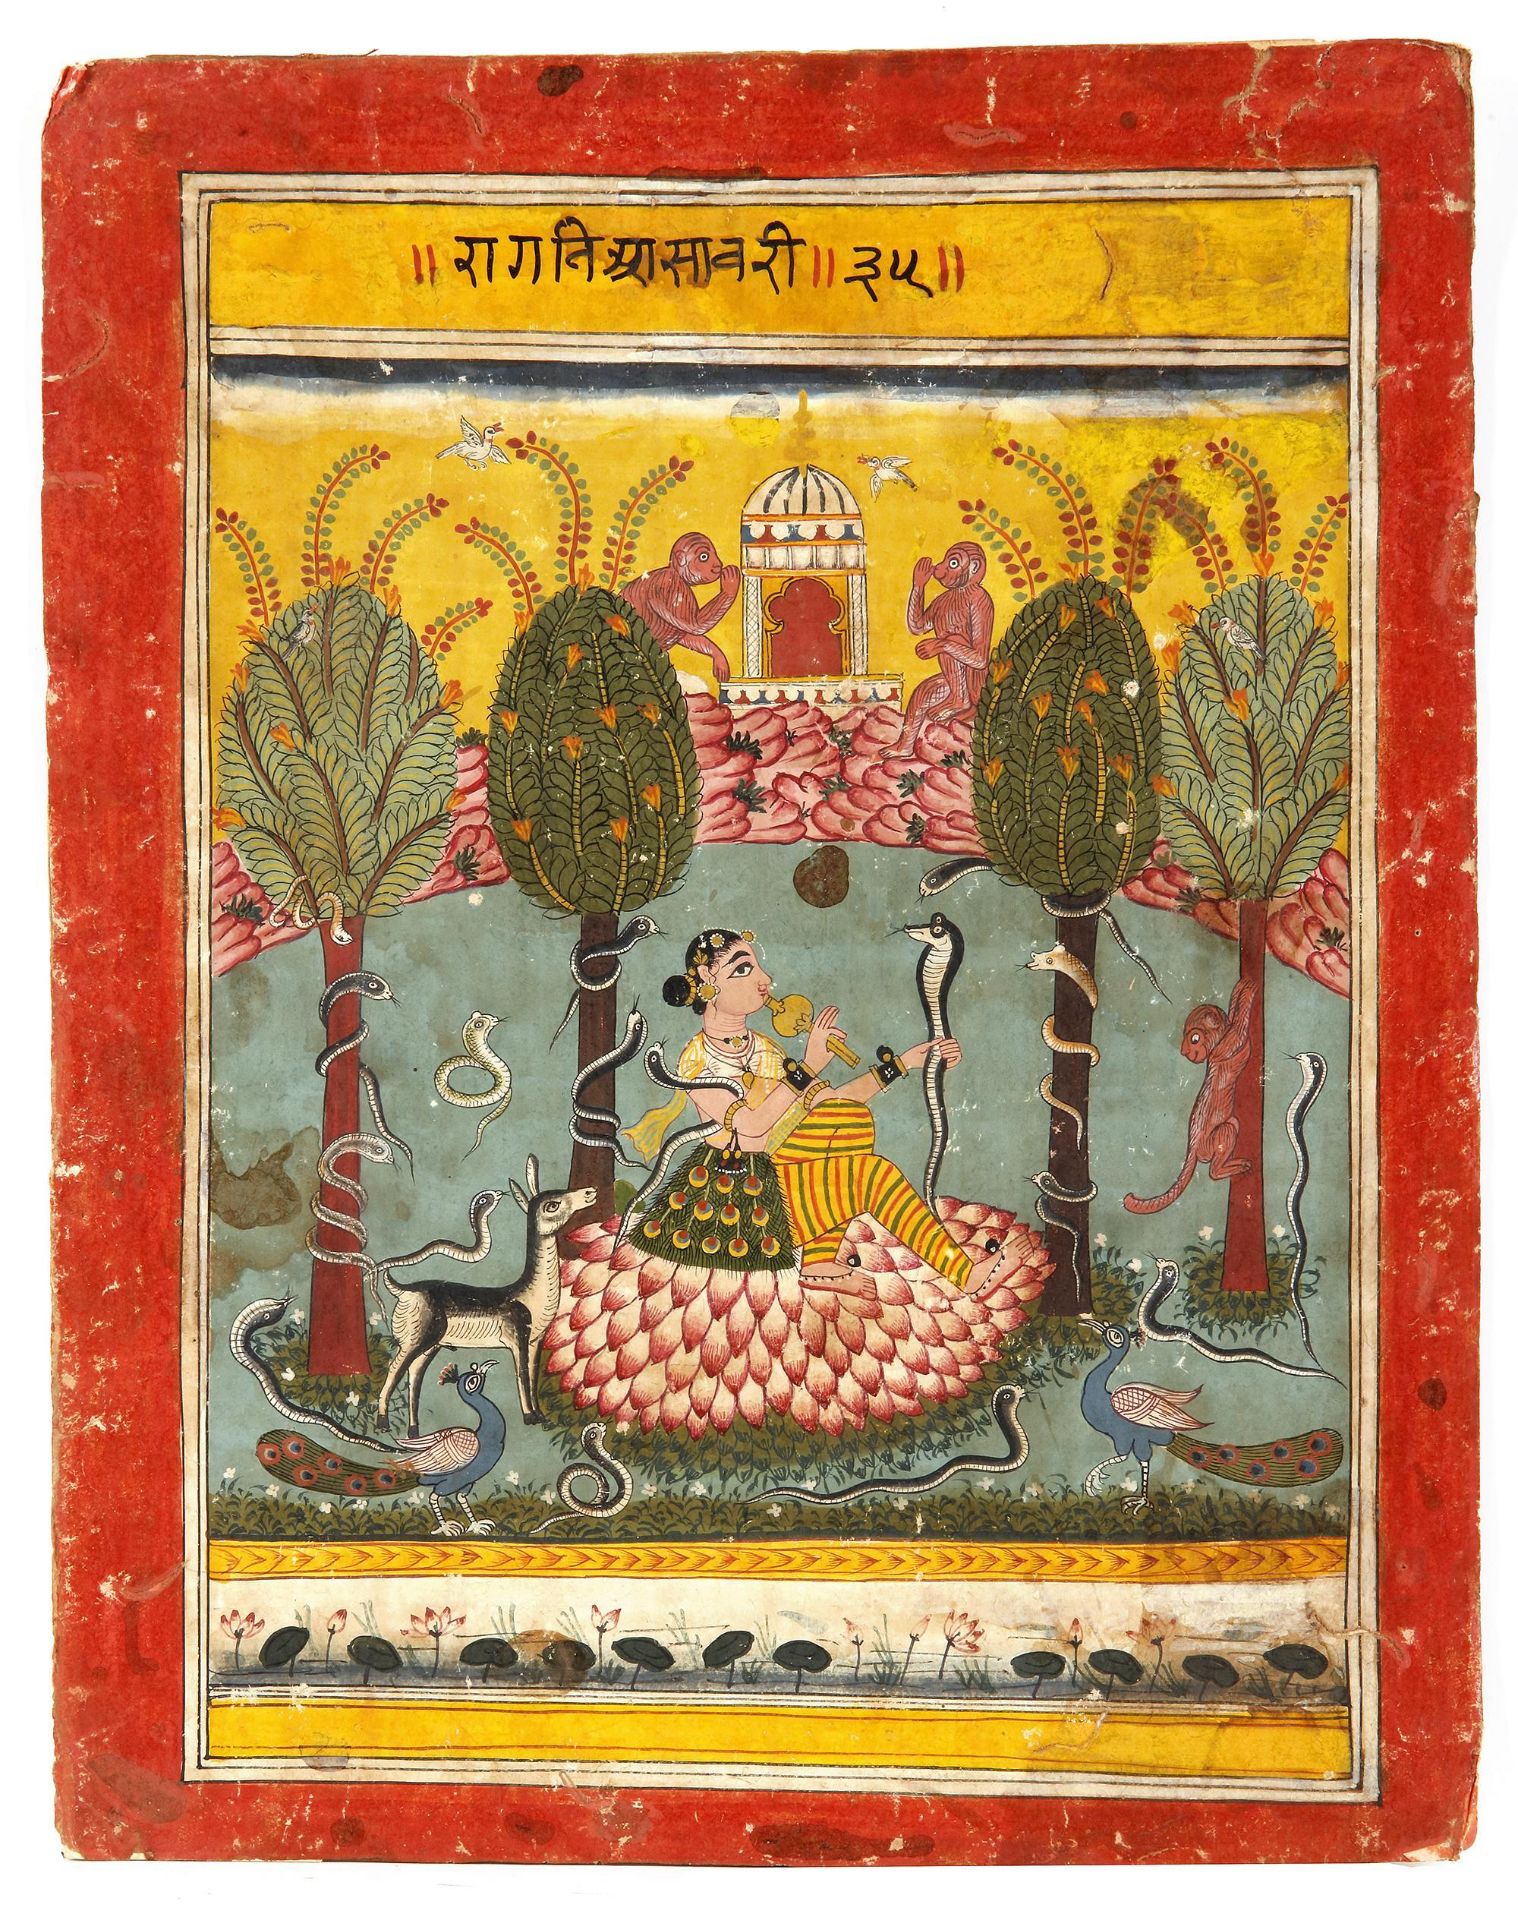 AN ILLUSTRATION FROM THE RAGAMALA SERIES, SHRI RAGA, CENTRAL INDIA, MALWA 17TH CENTURY - Image 4 of 6